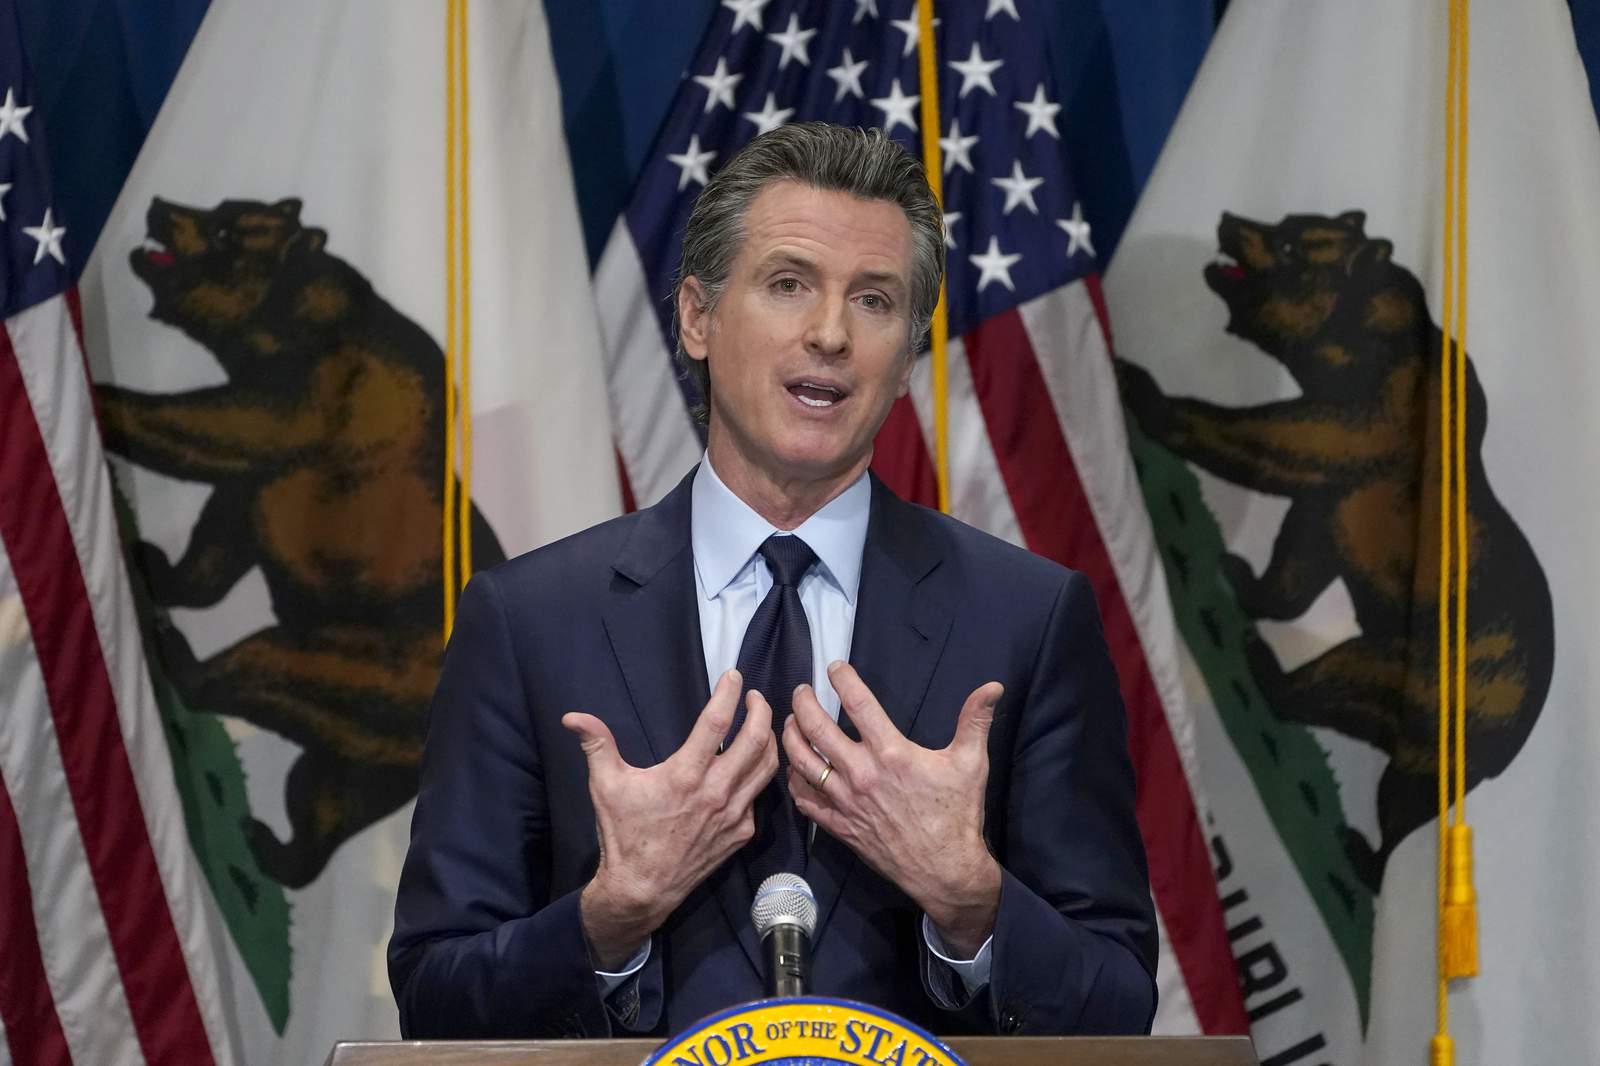 California Democrats see backlash after recall 'coup' claims